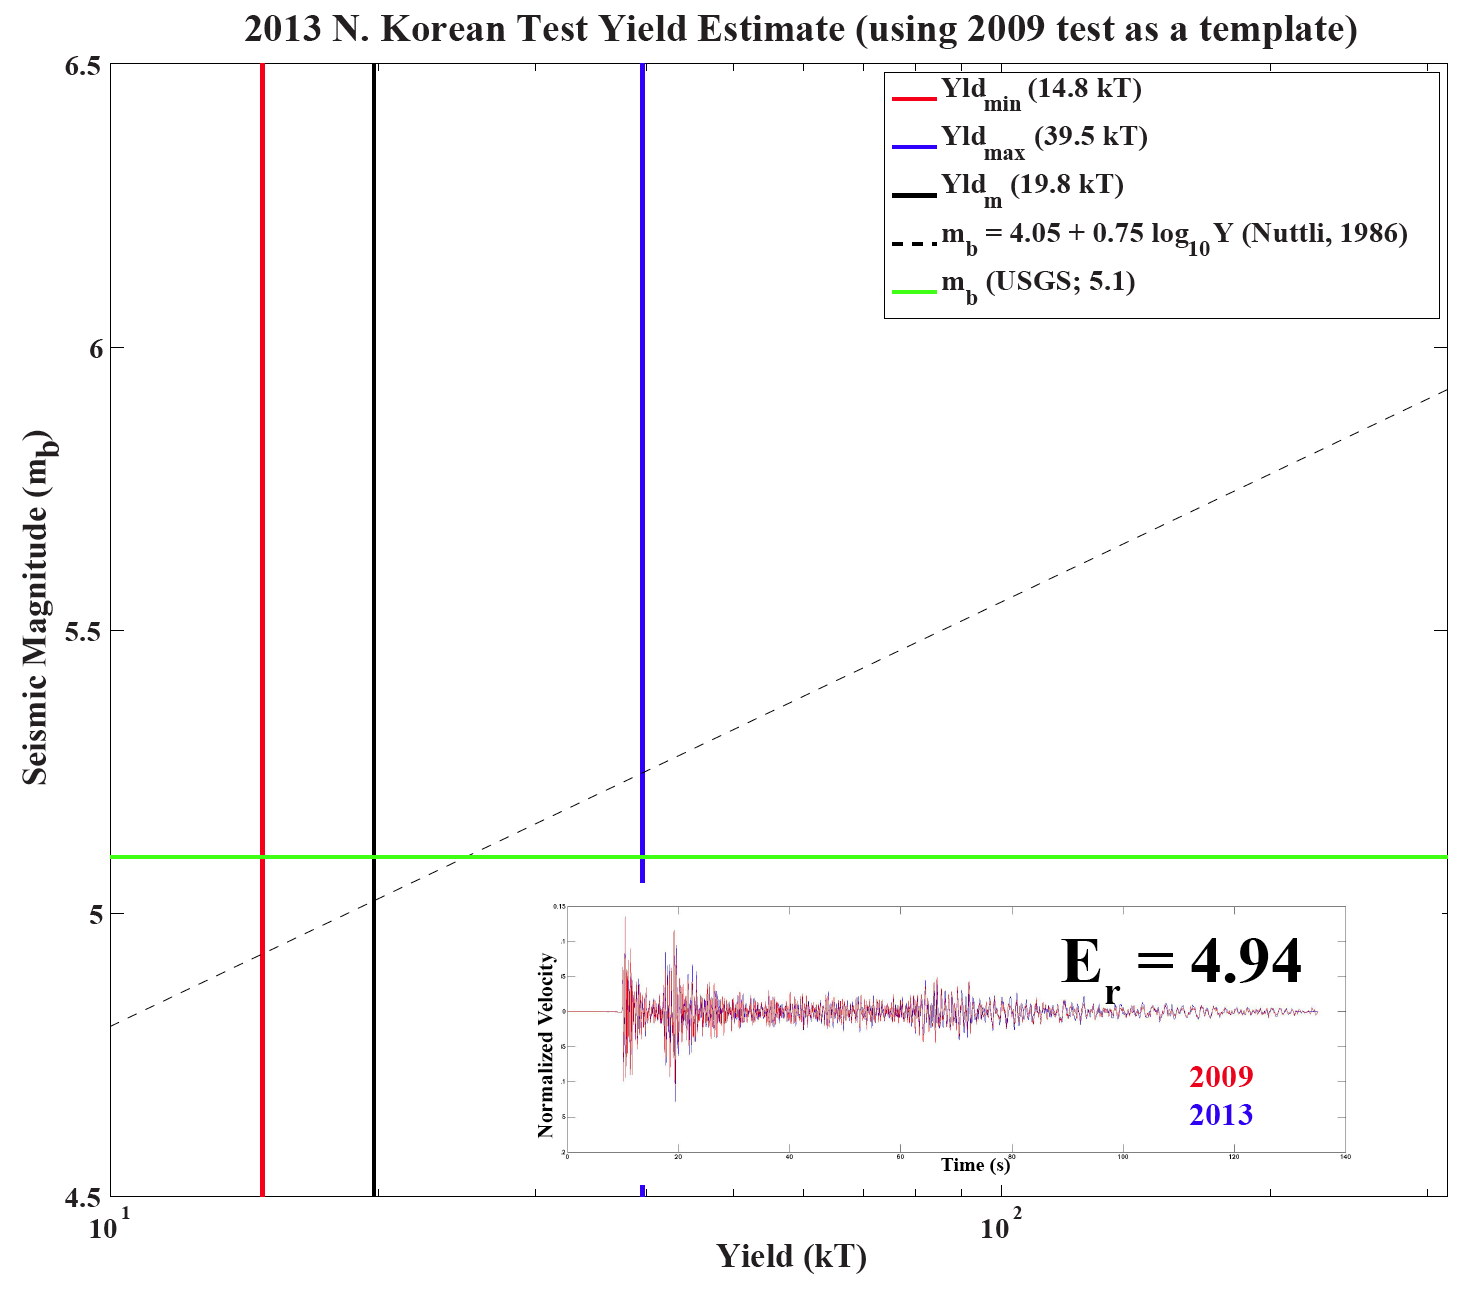 2013 N. Korean test yield estimate, using 2009 test as a template